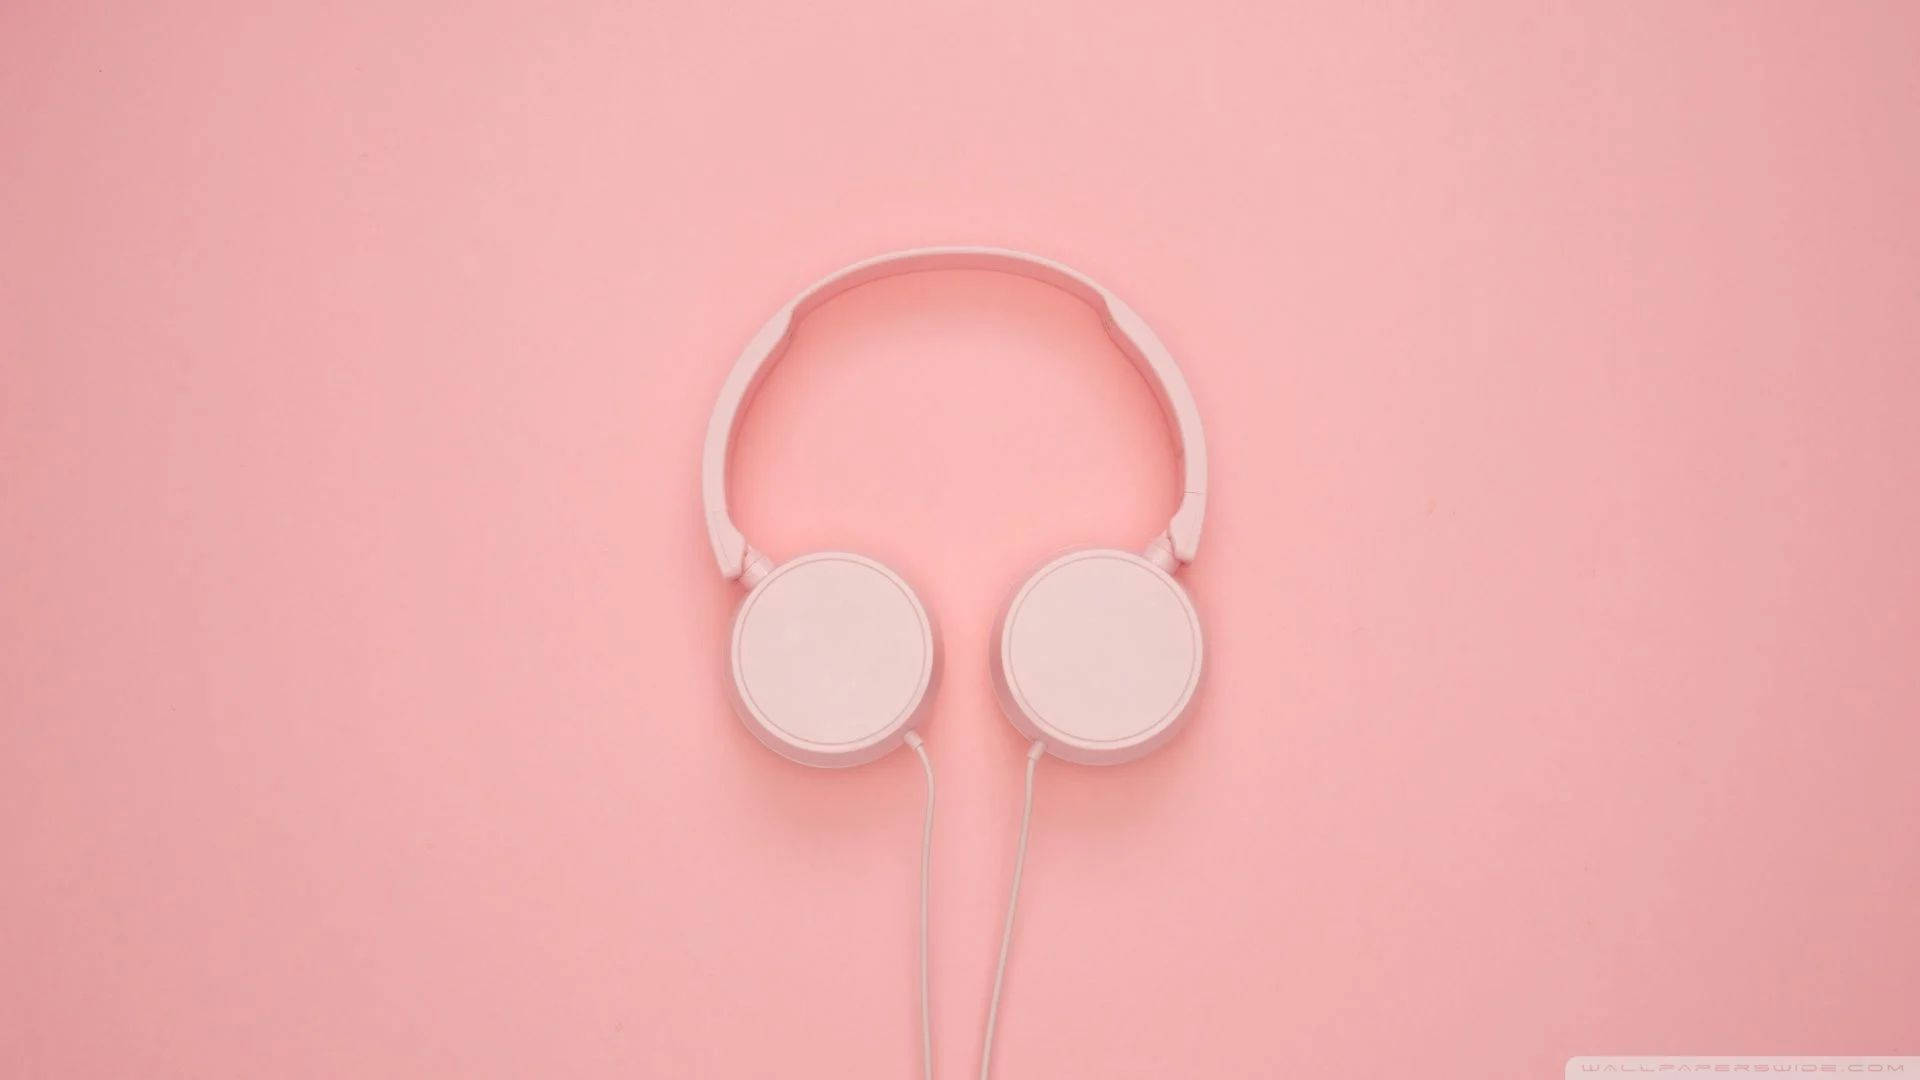 Headphone On Aesthetic Pink Wallpaper